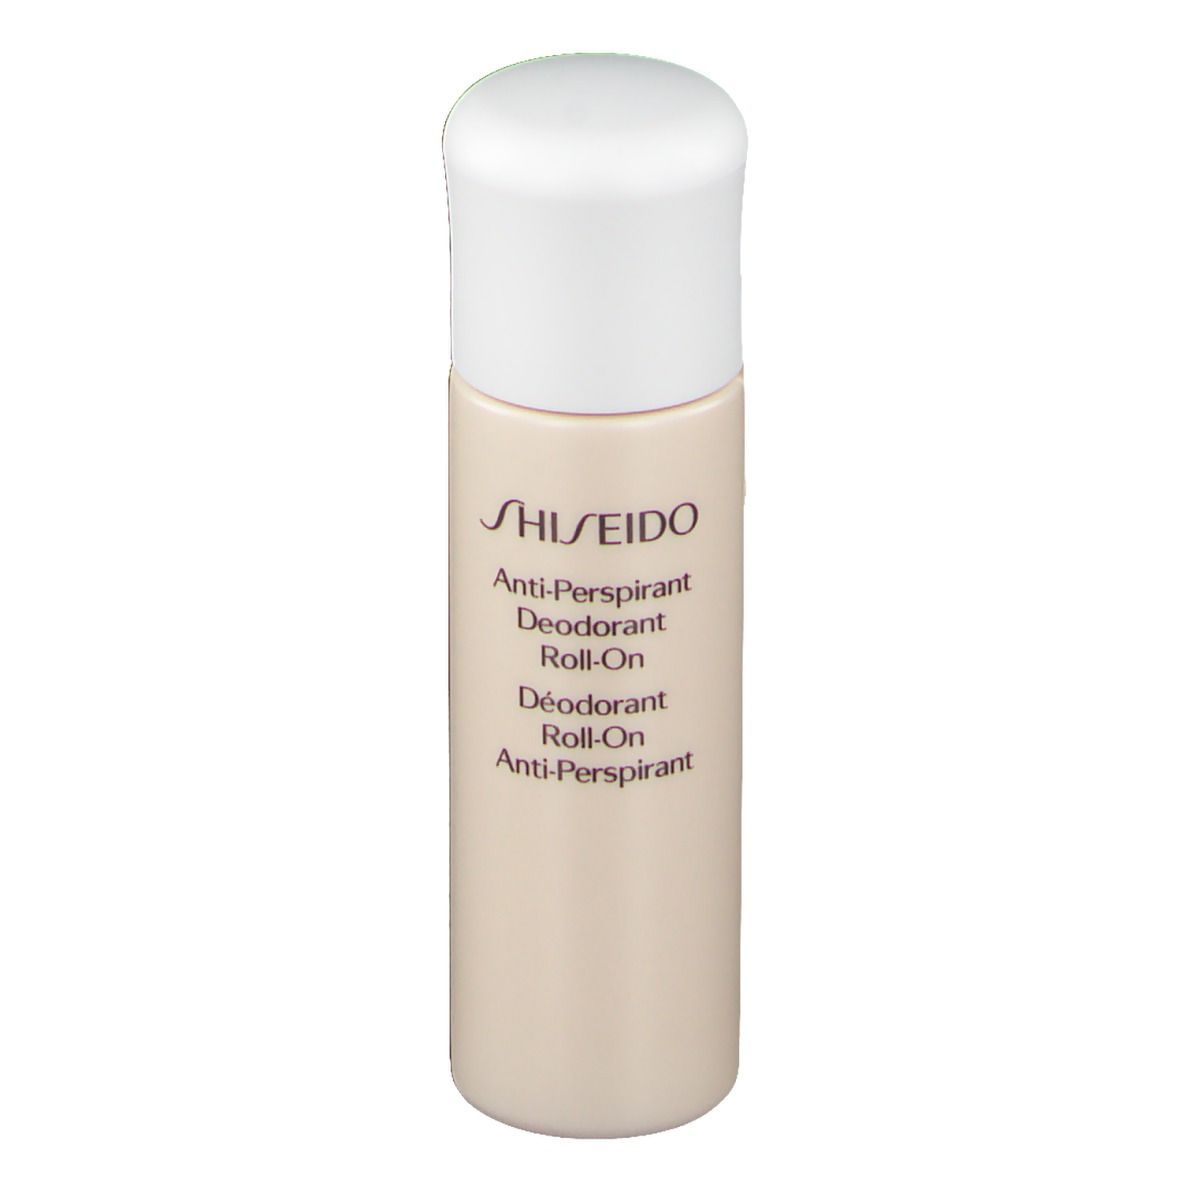 Shiseido Deodorant Anti-Perspirant Deodorant Roll-On